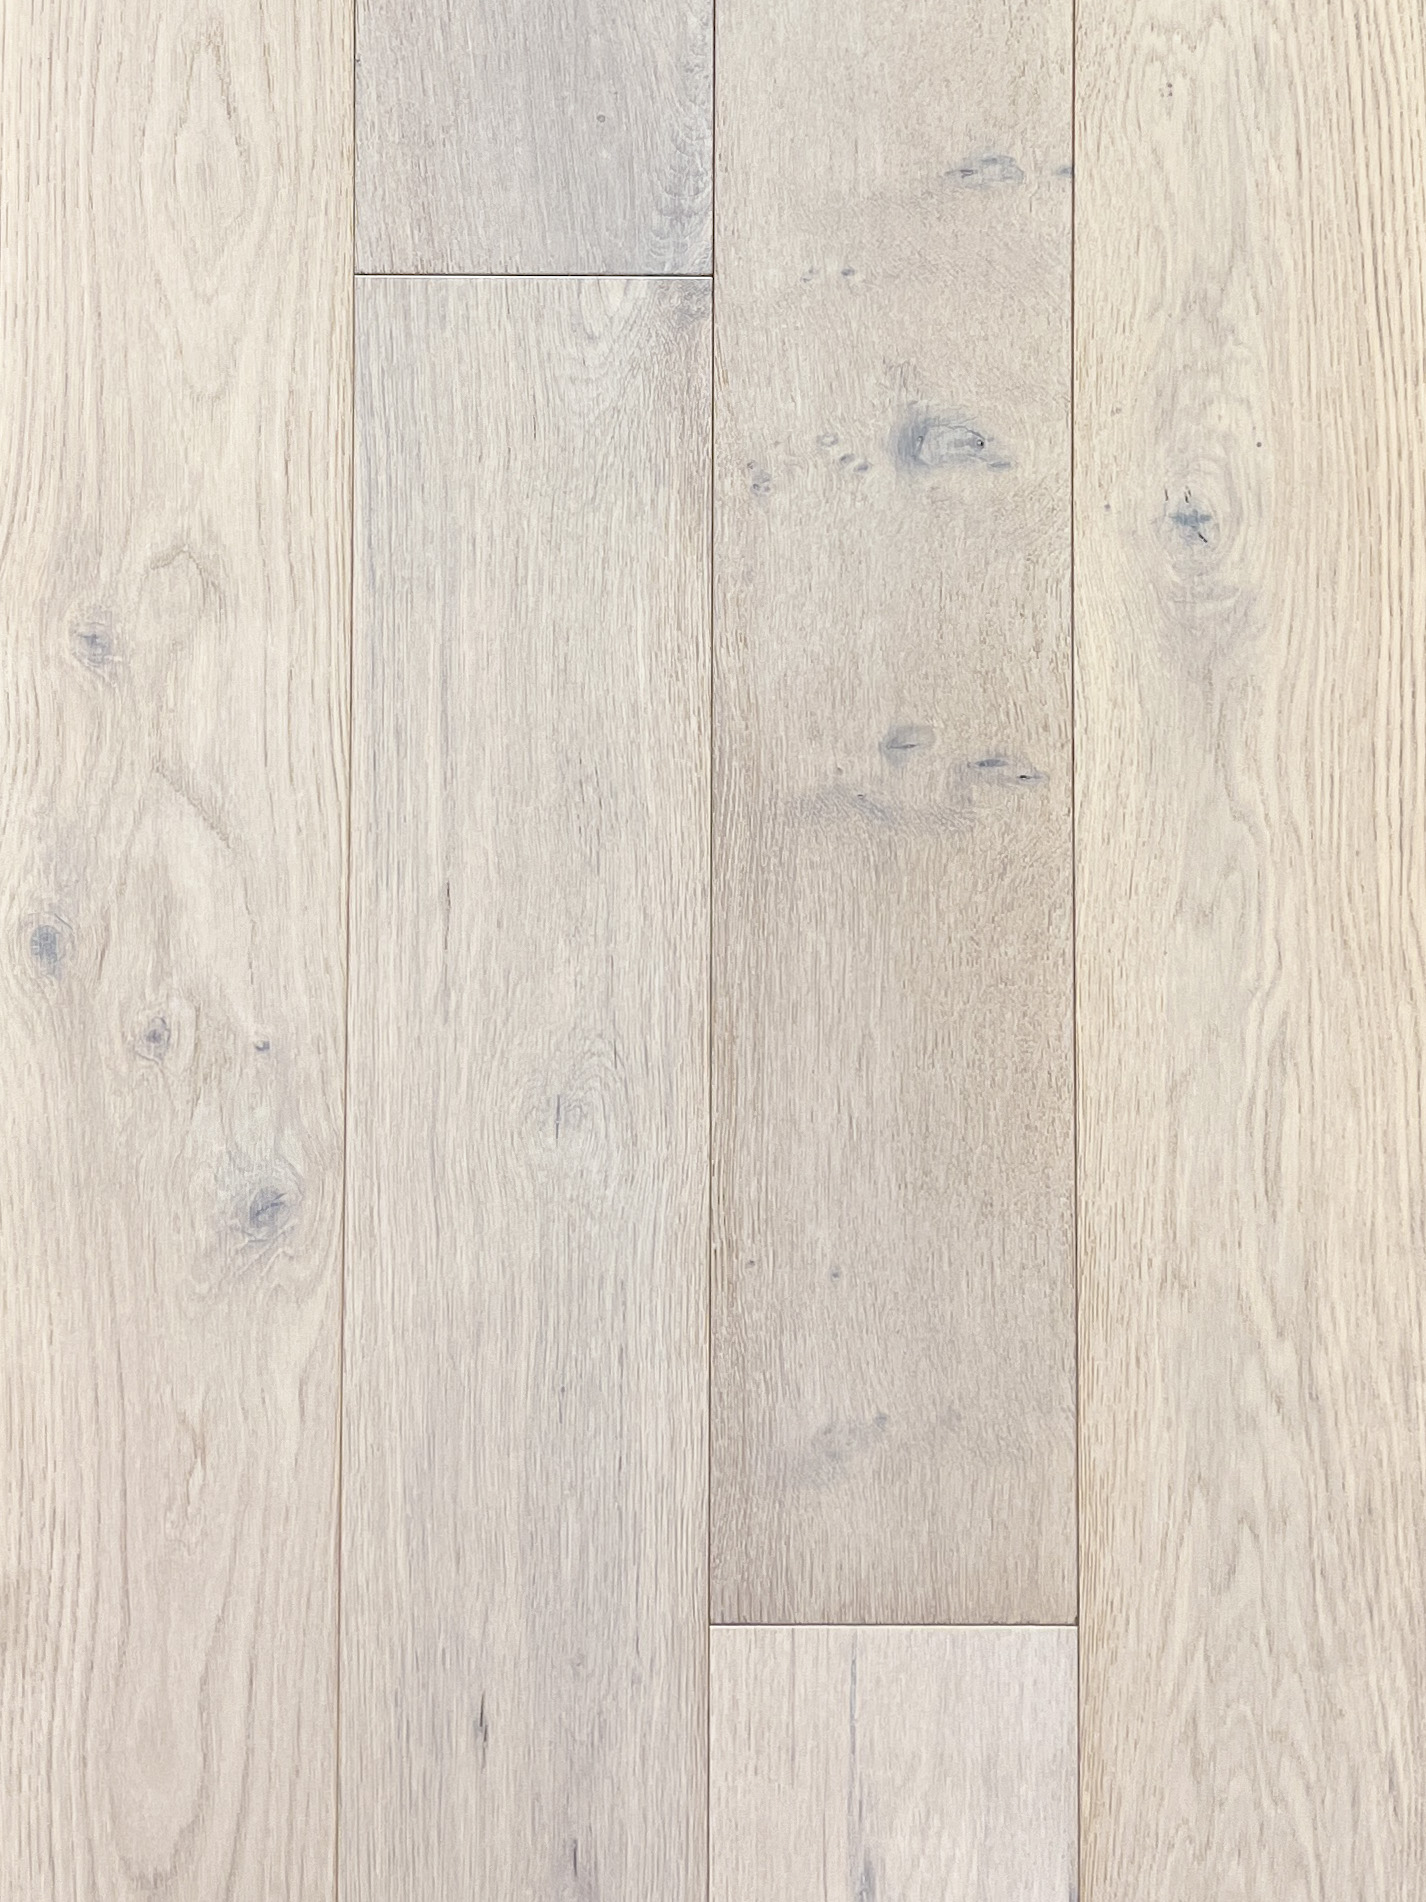 Floorest - 7 1/2 x 3/4 - Oak Silk Road (3MM Top) - Engineered Hardwood - 27.20 SF/b